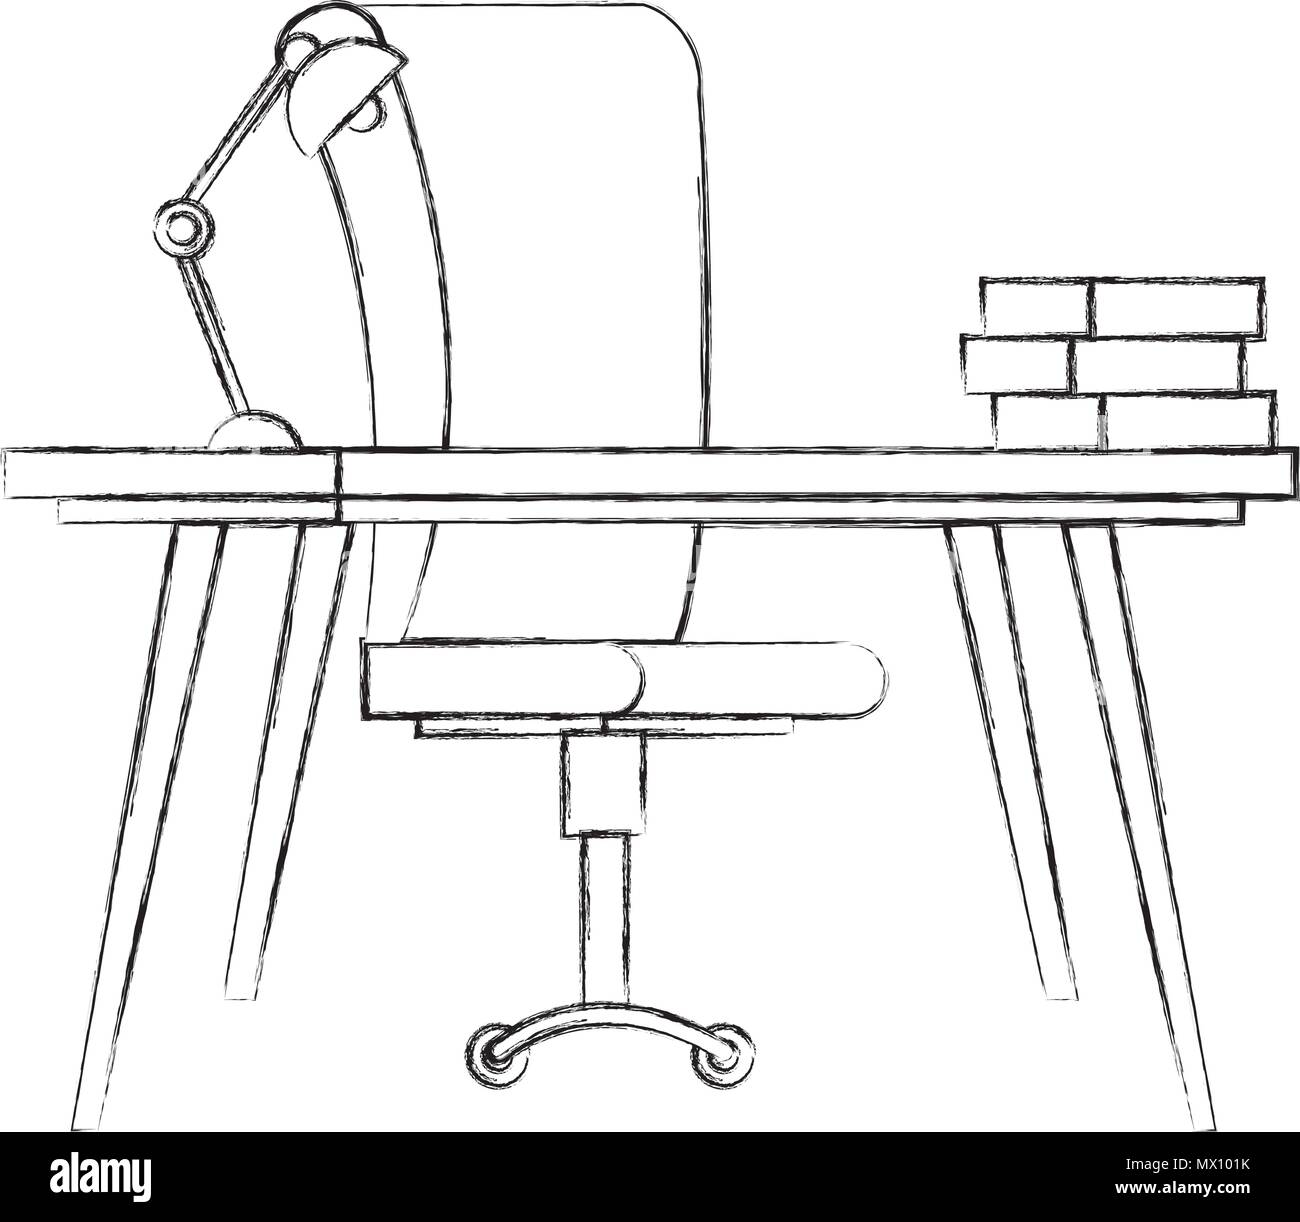 desk with books and lamp office scene vector illustration design Stock Vector